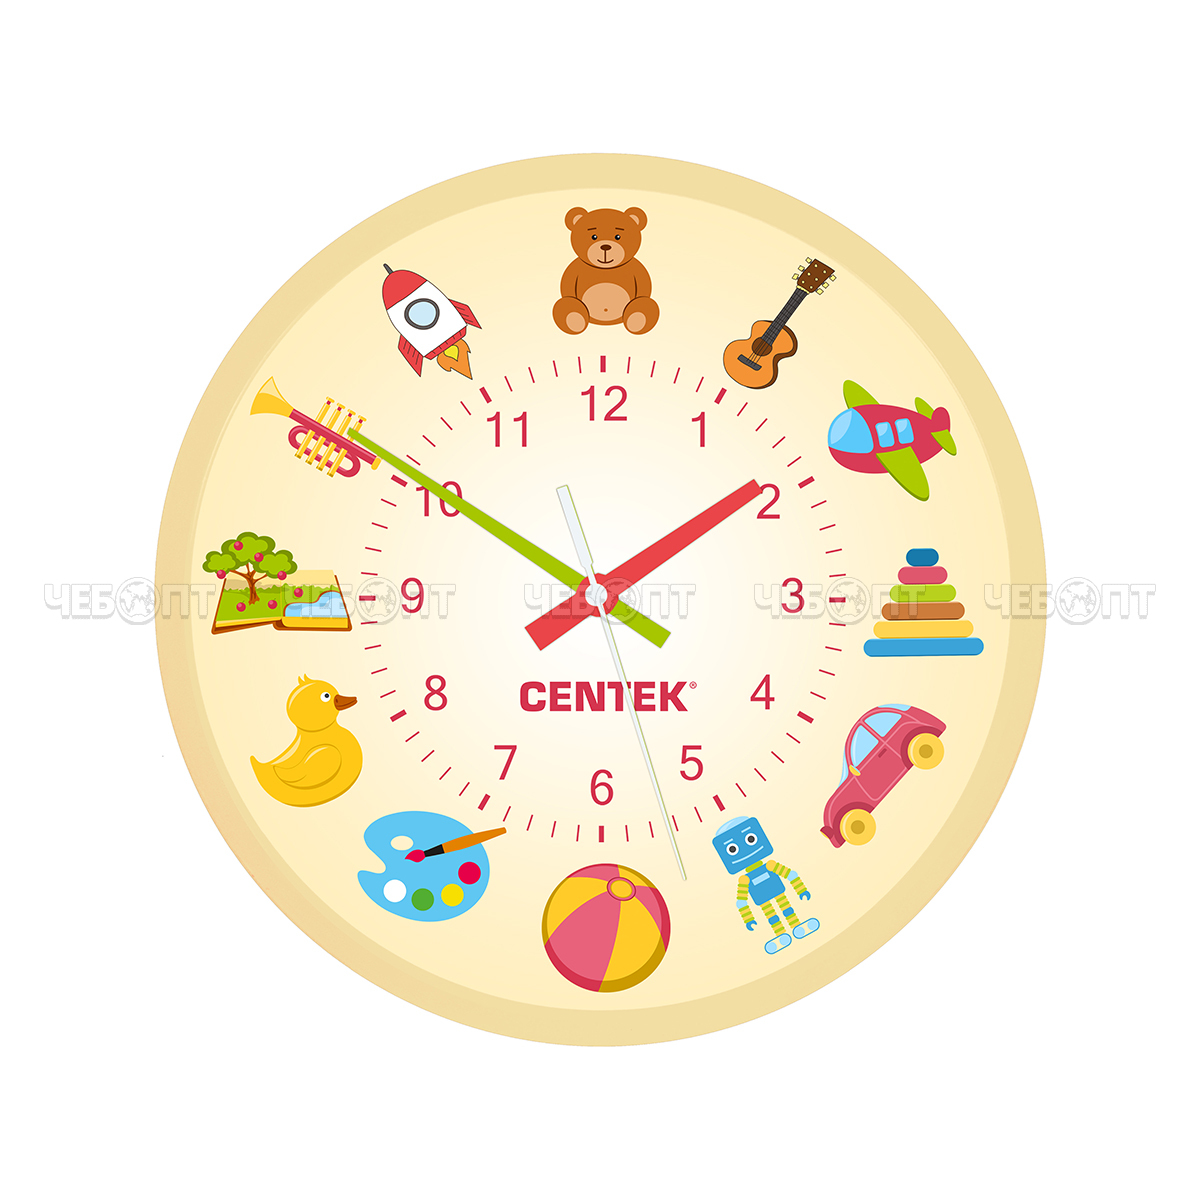 Часы настенные CENTEK CT-7104 с рисунком из пластика d - 250 мм [10]. ЧЕБОПТ.